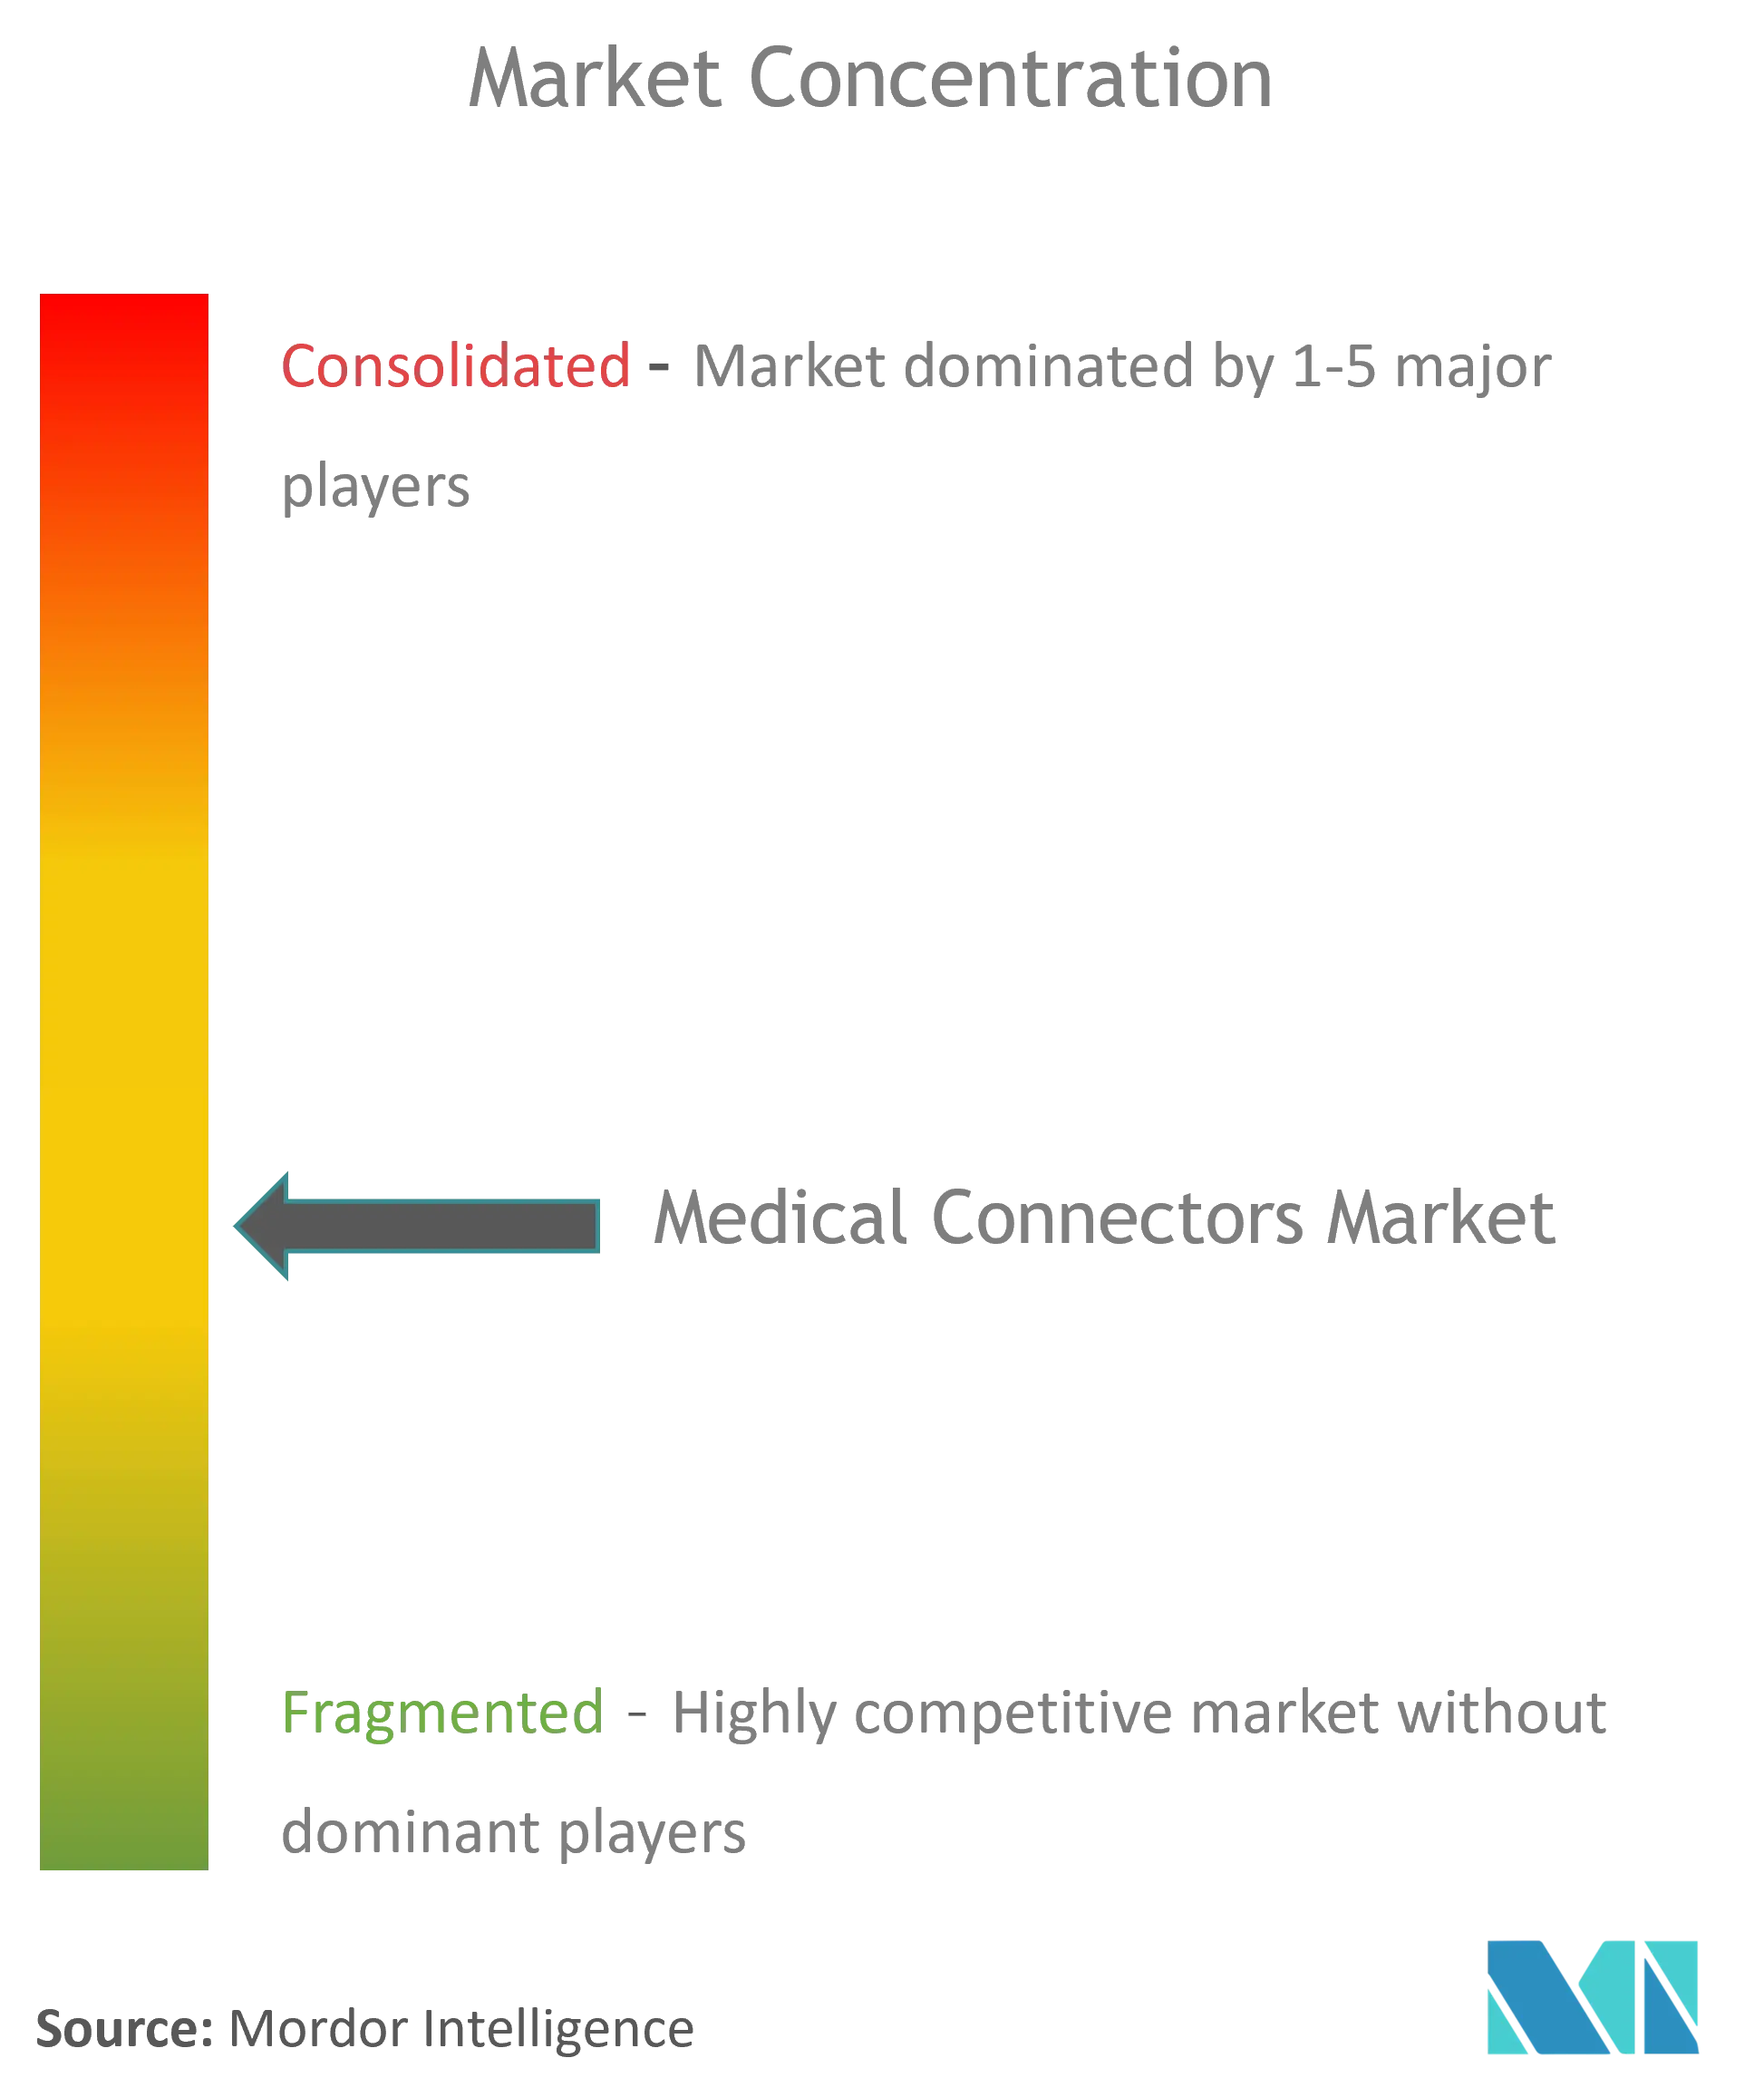 Medical Connectors Market Concentration